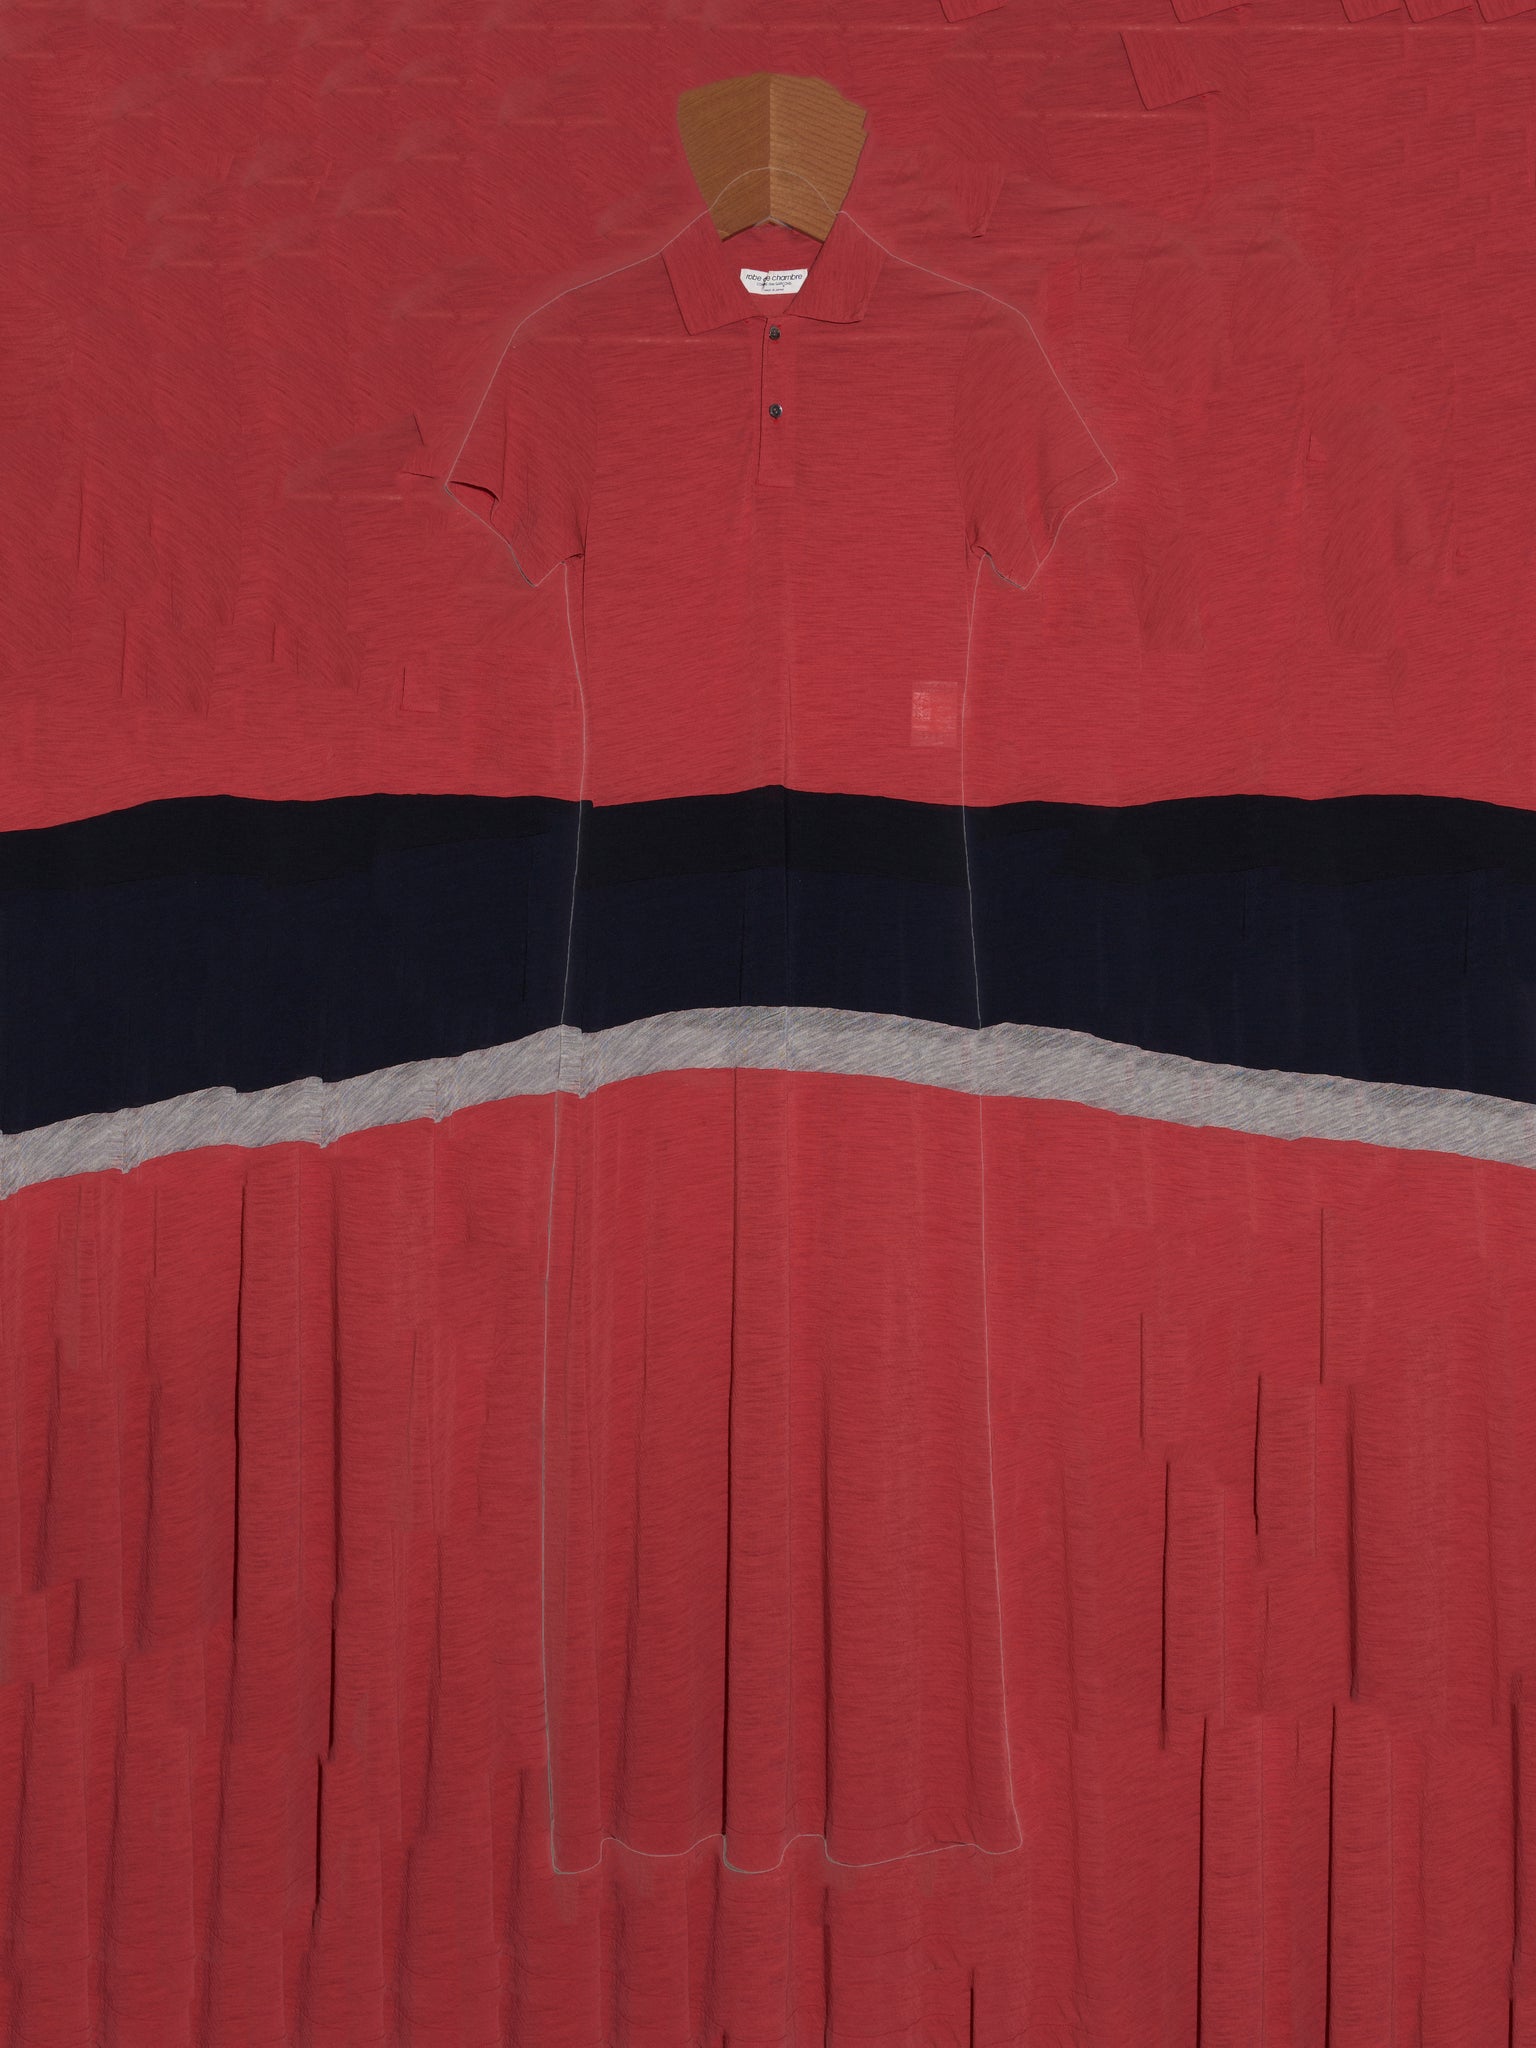 Comme des Garcons SS1996 burnt orange wool jersey polo shirt maxi dress